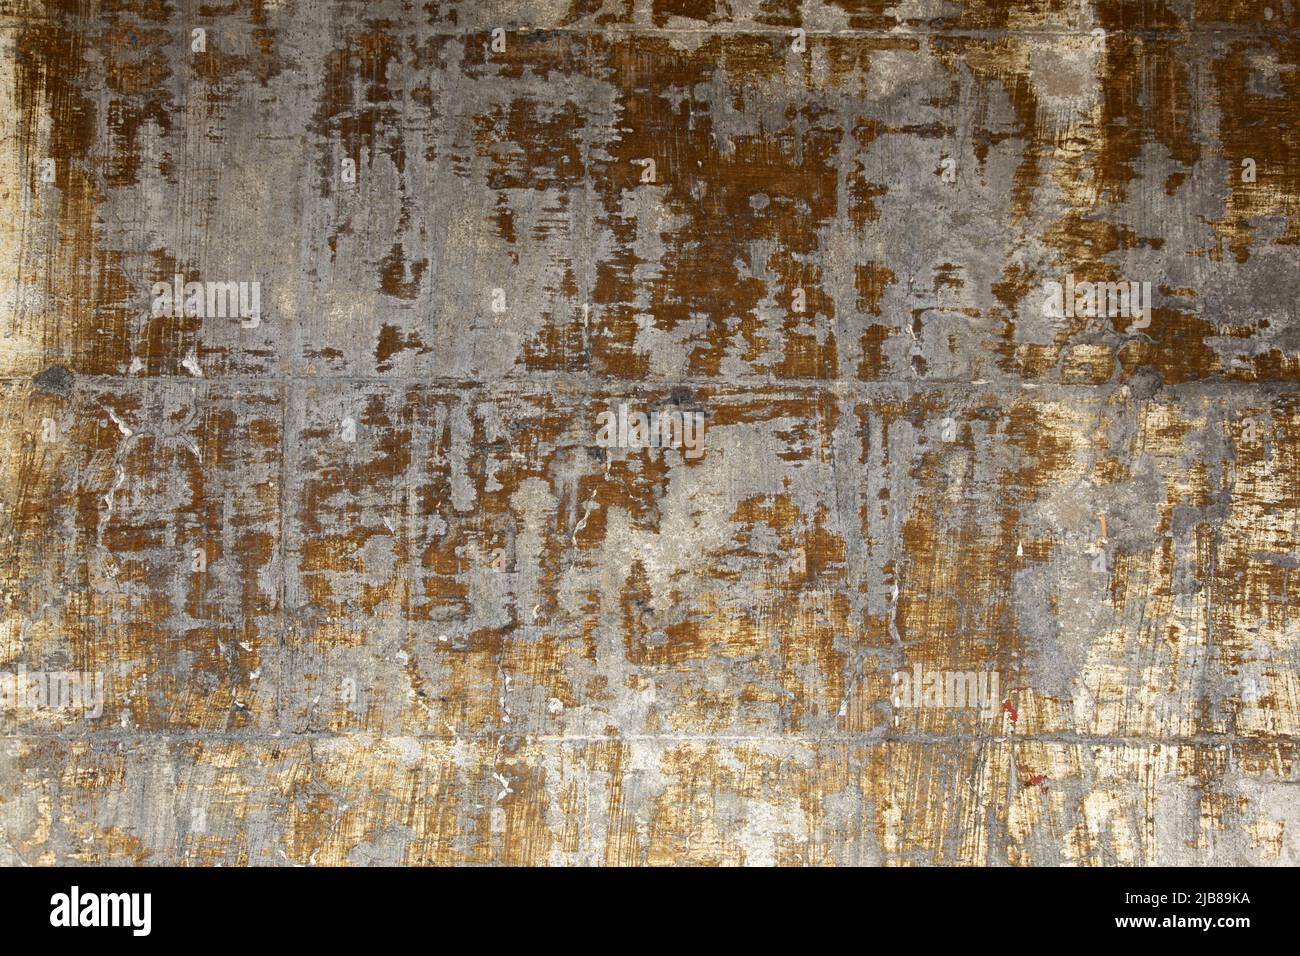 Grunge concrete background Stock Photo